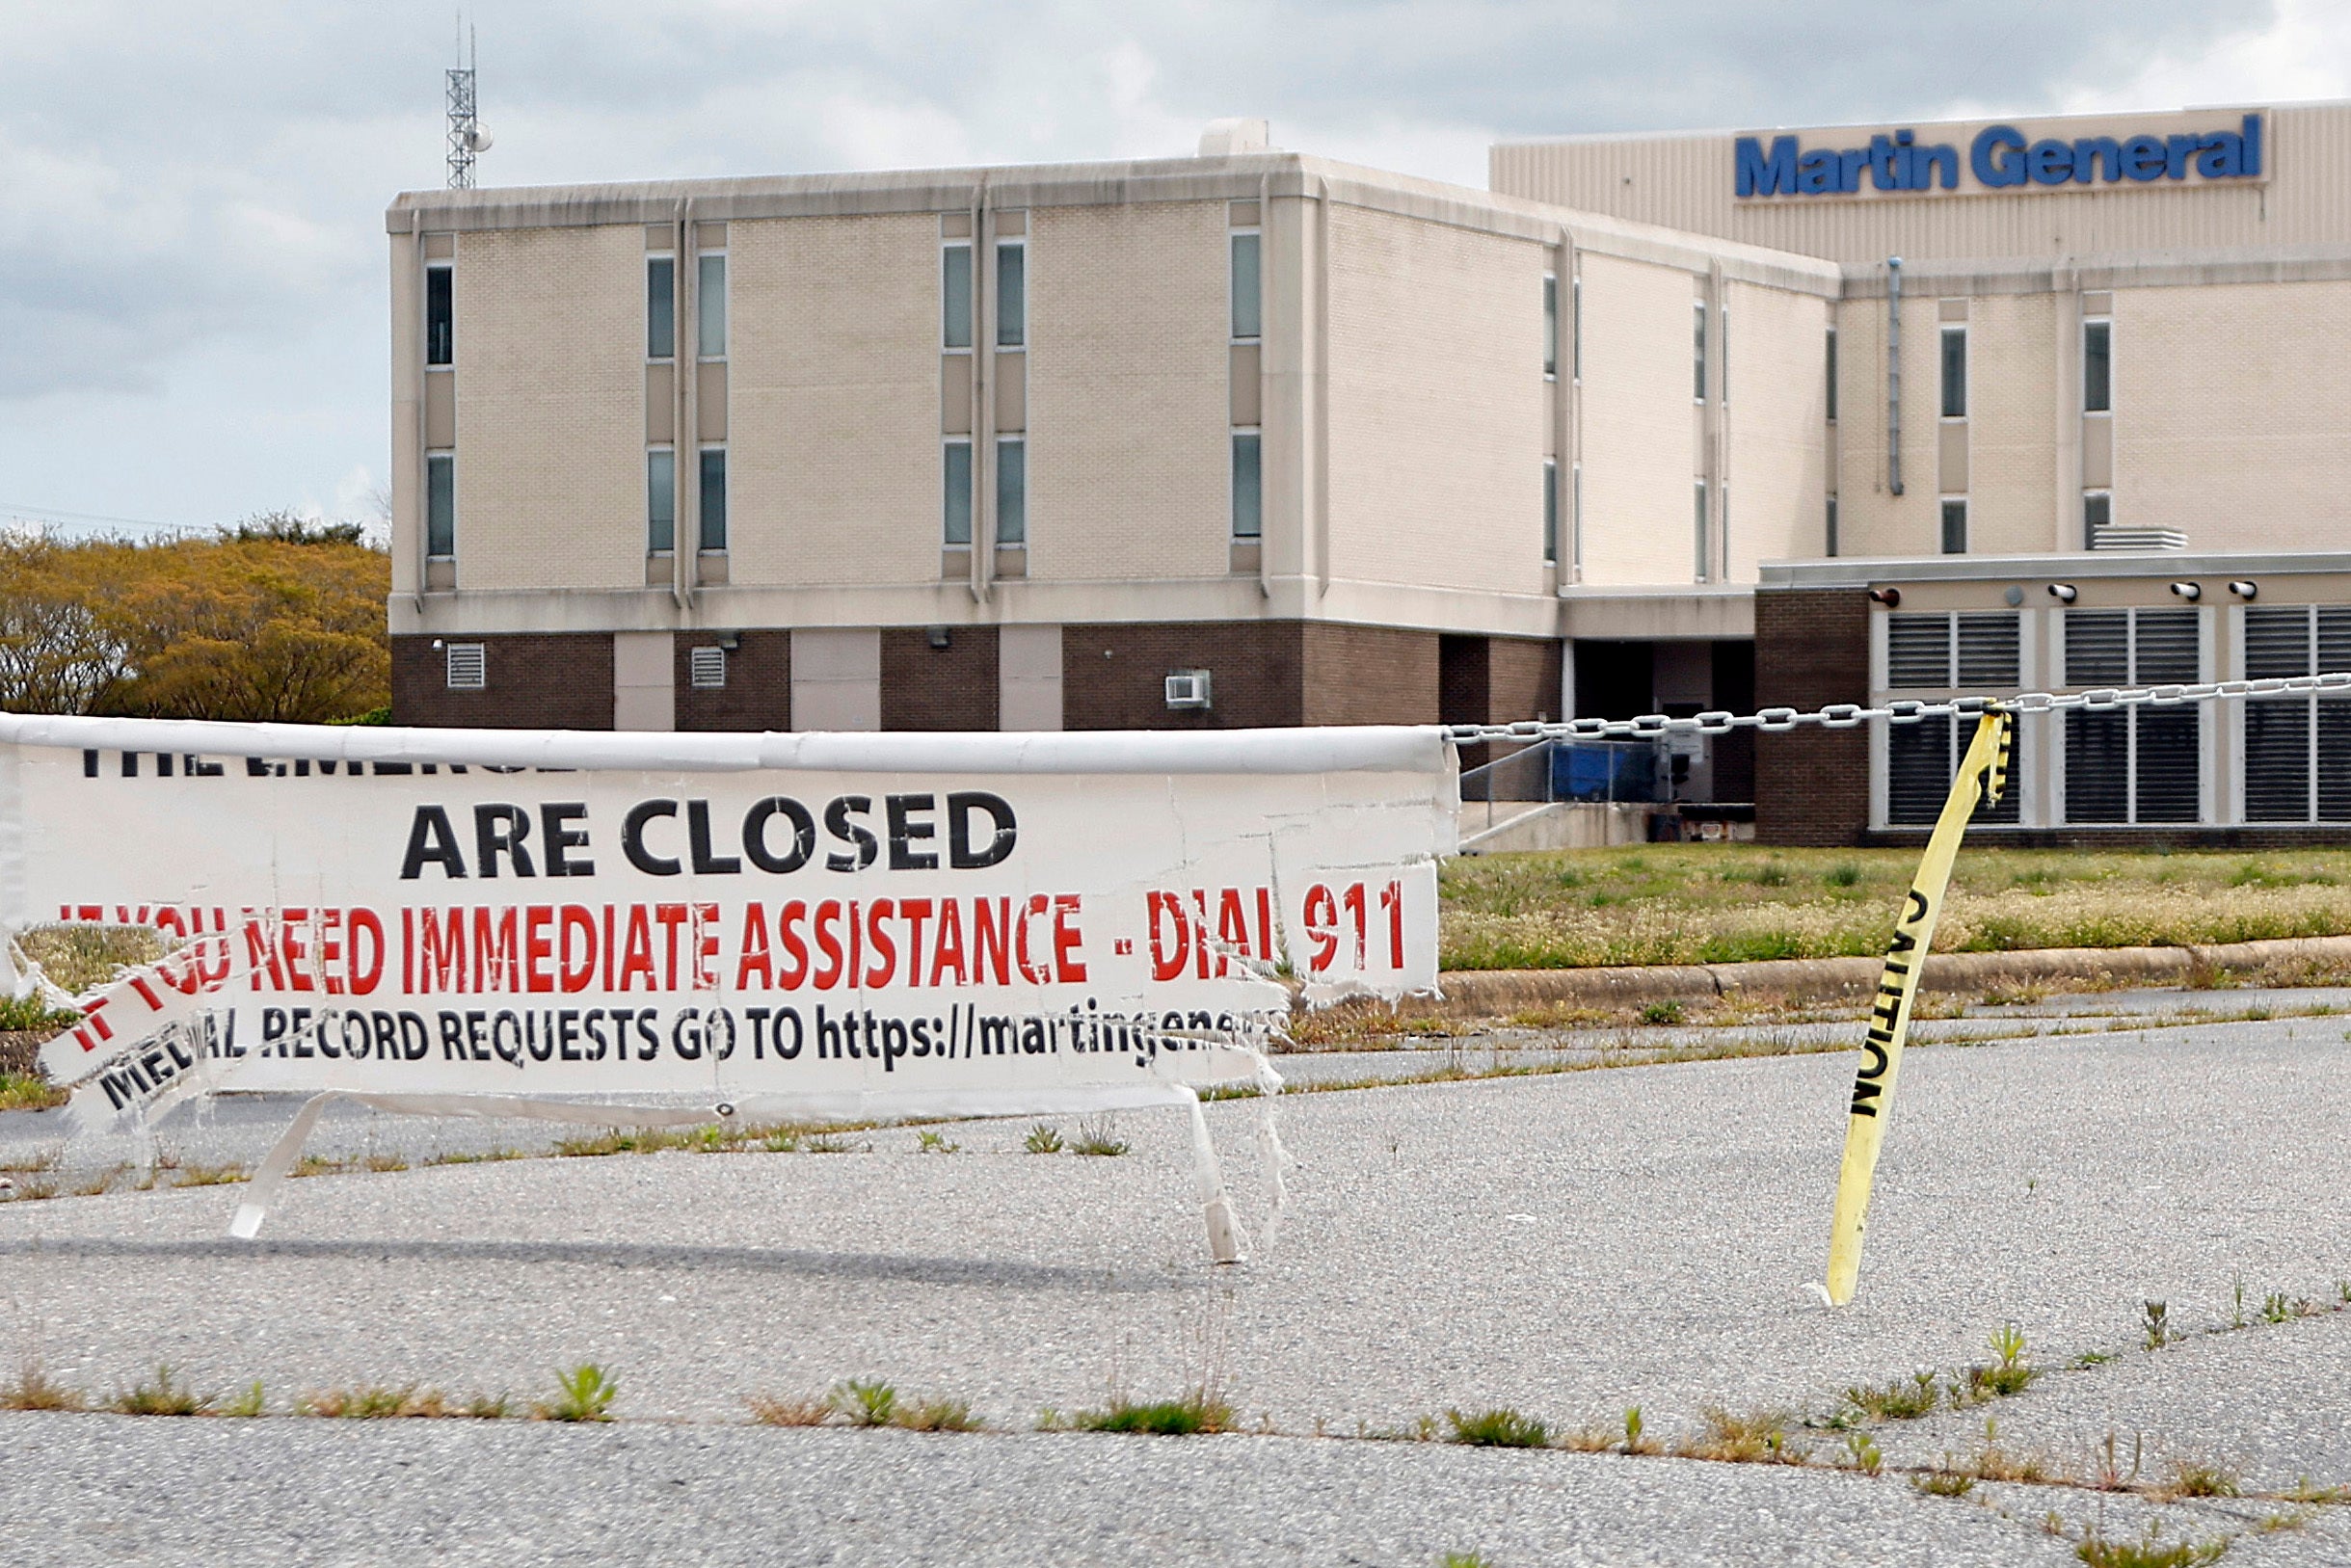 Martin General Hospital in Williamston, NC, has closed